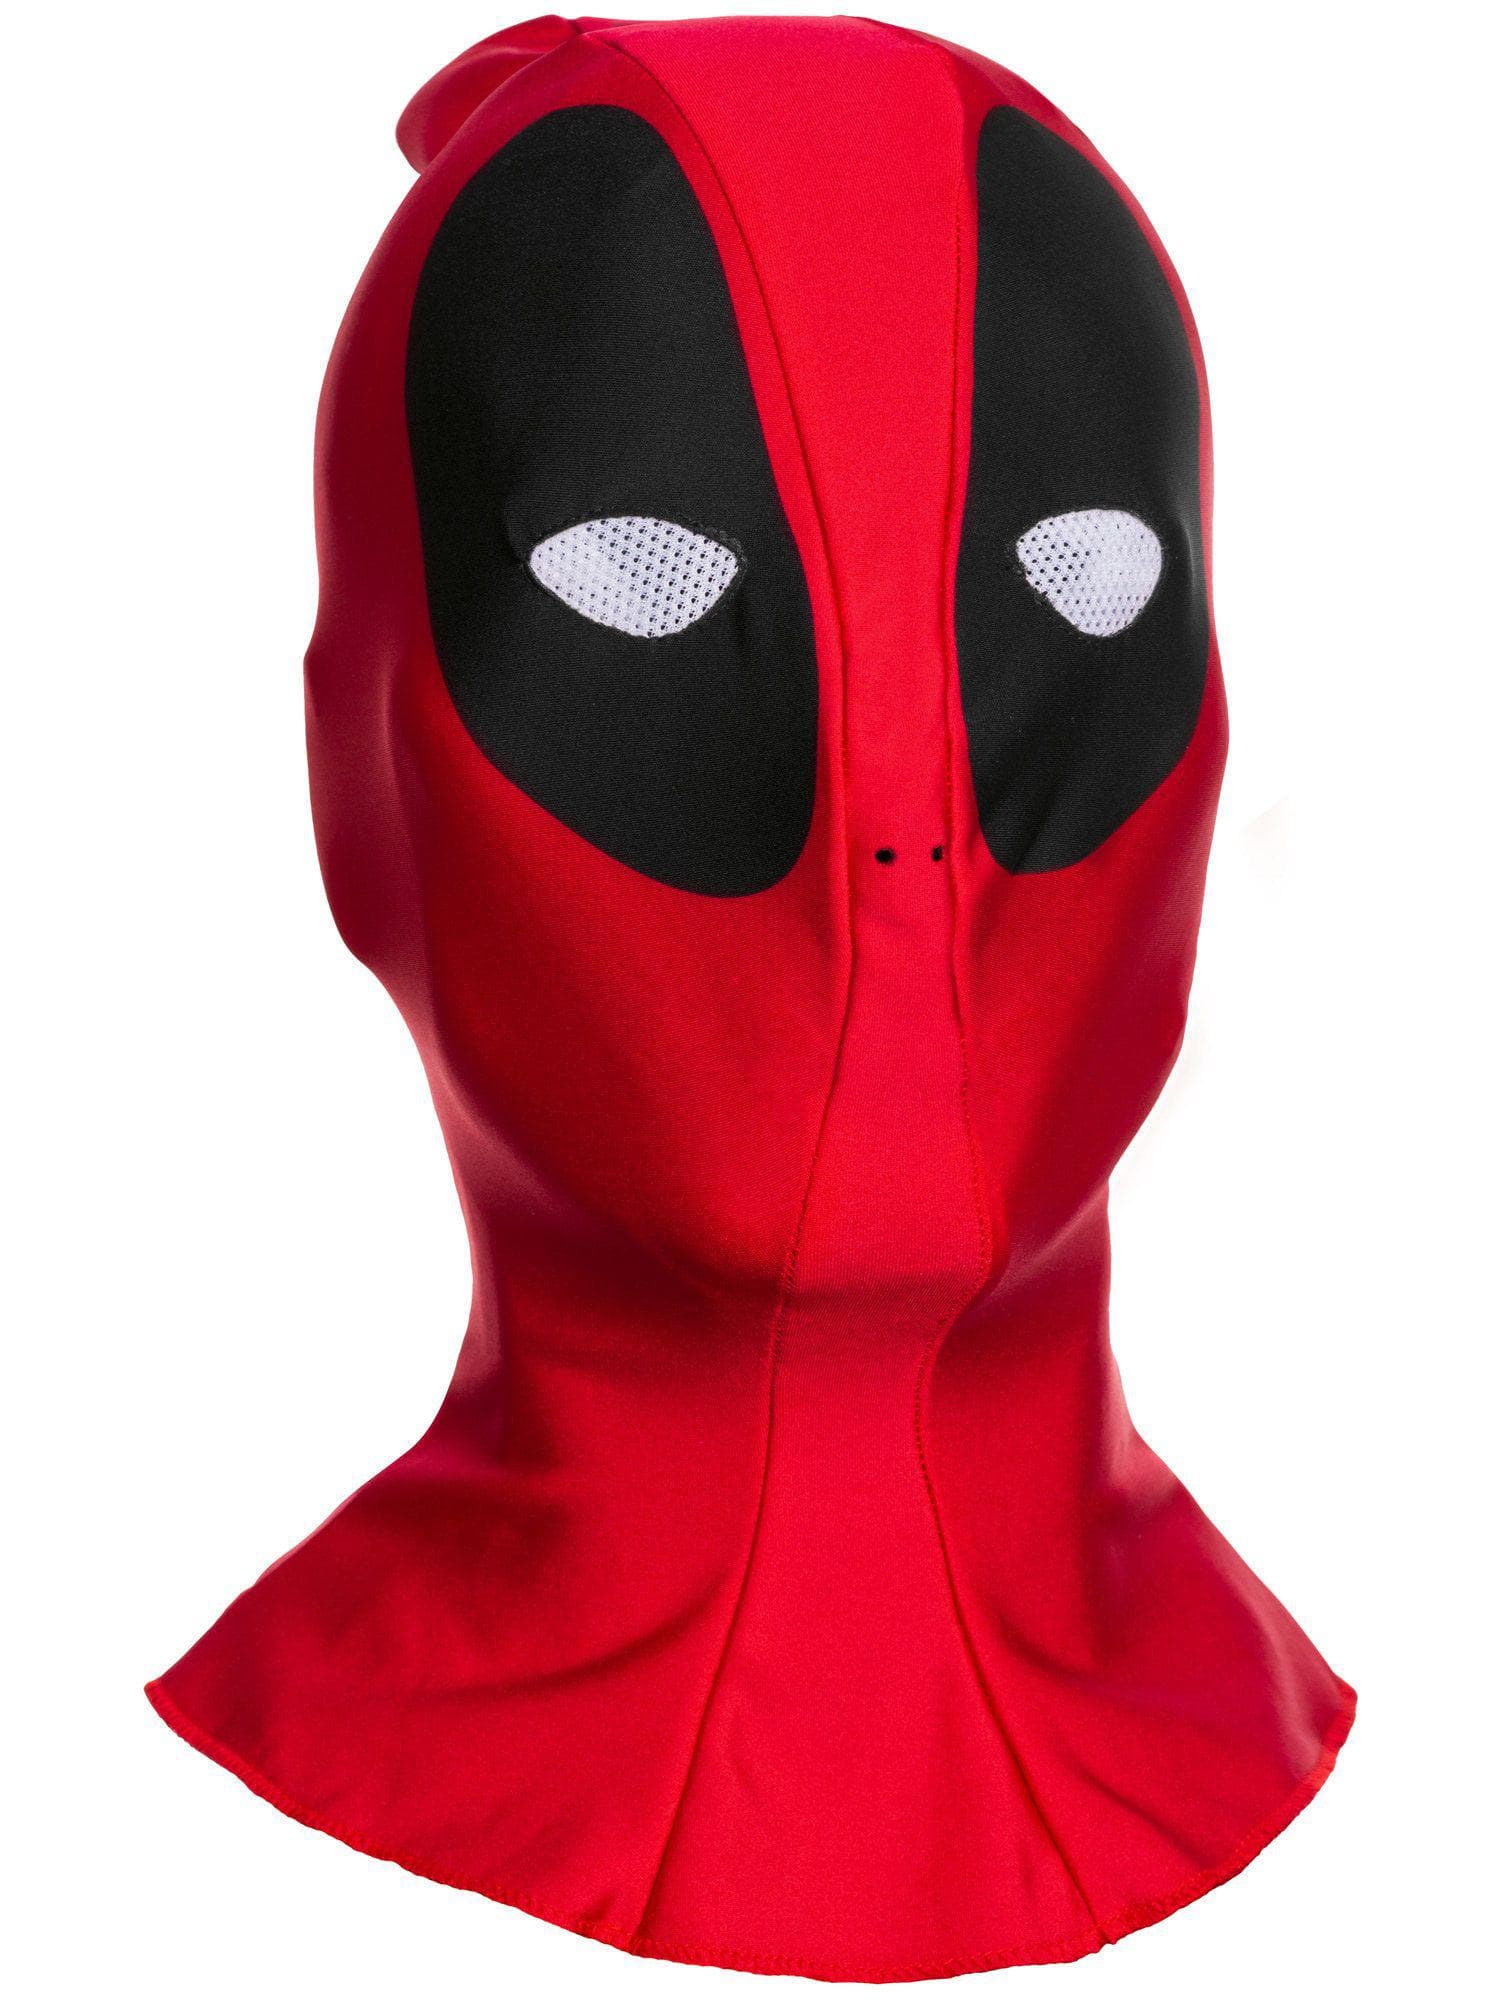 Men's Marvel Deadpool Mask - costumes.com